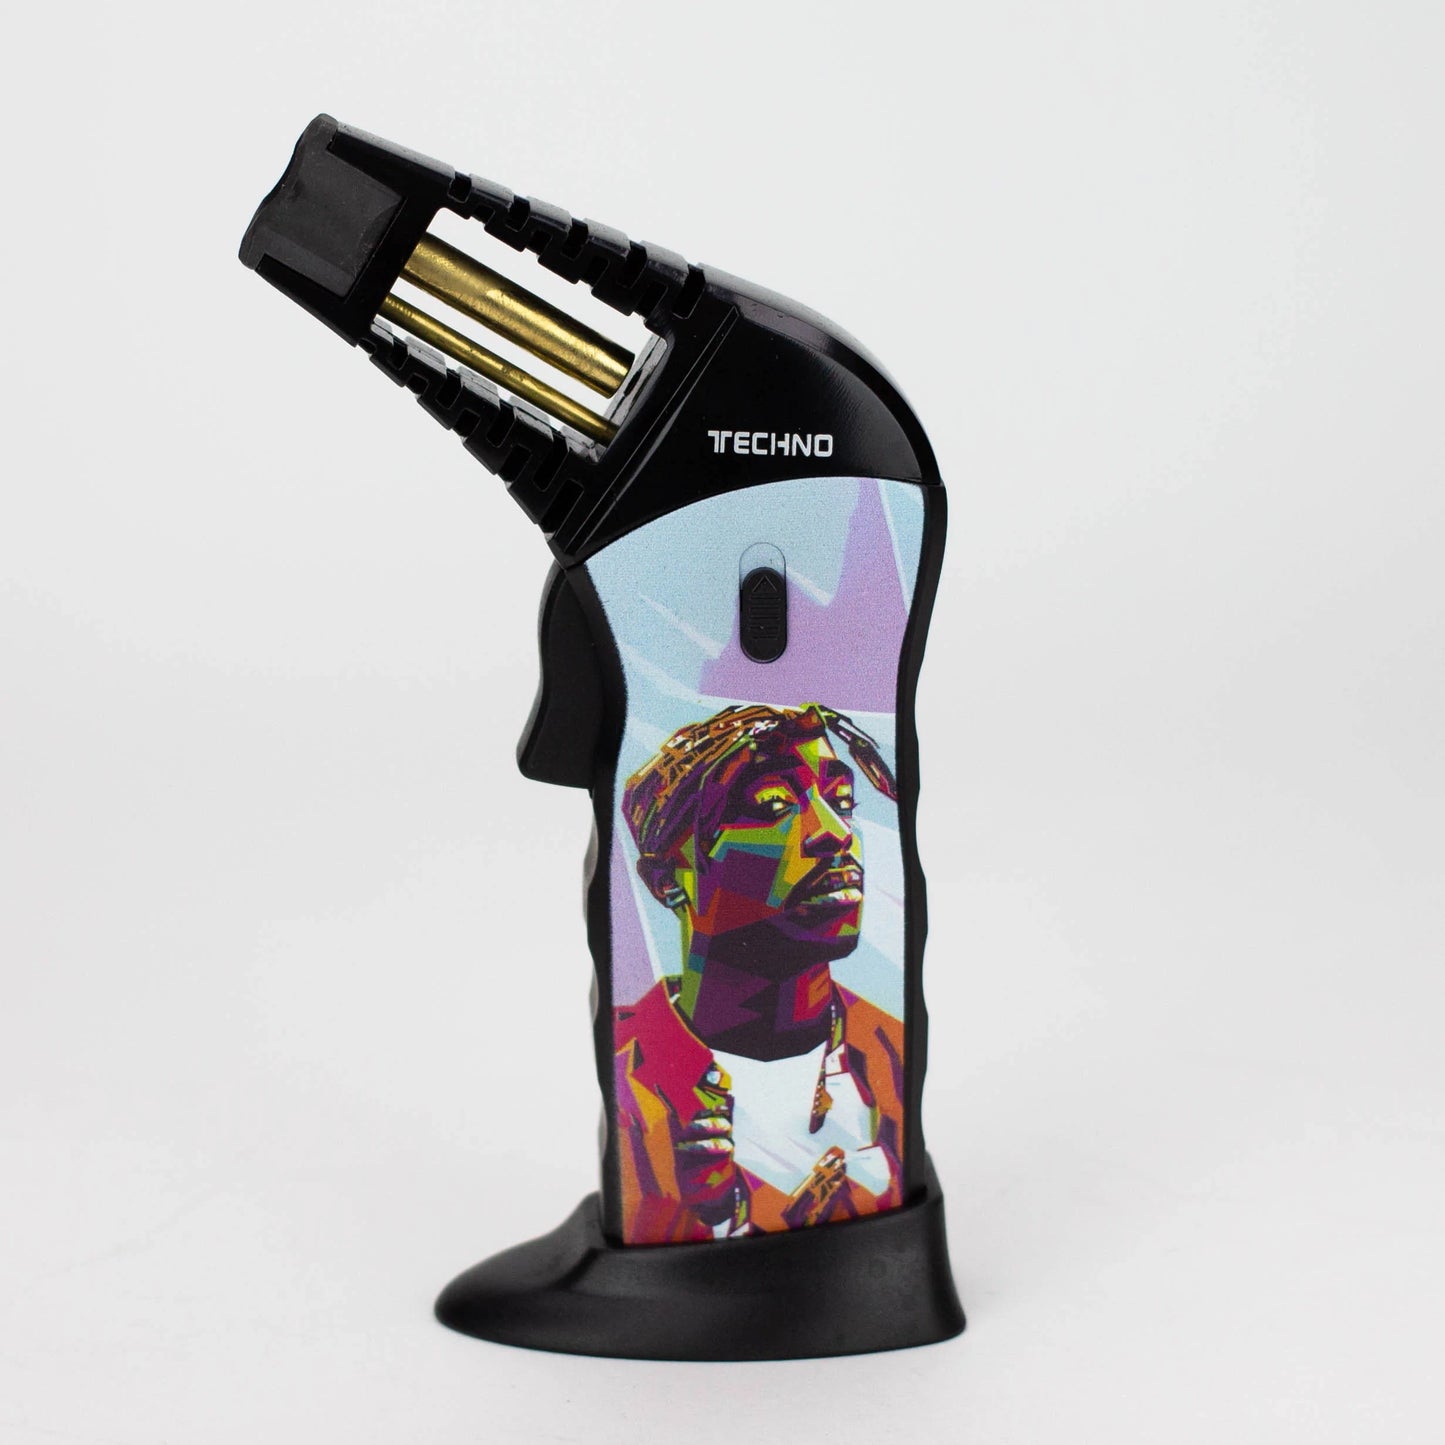 Techno | Adjustable Single Jet slant Torch Lighter in gift box [15811]_8